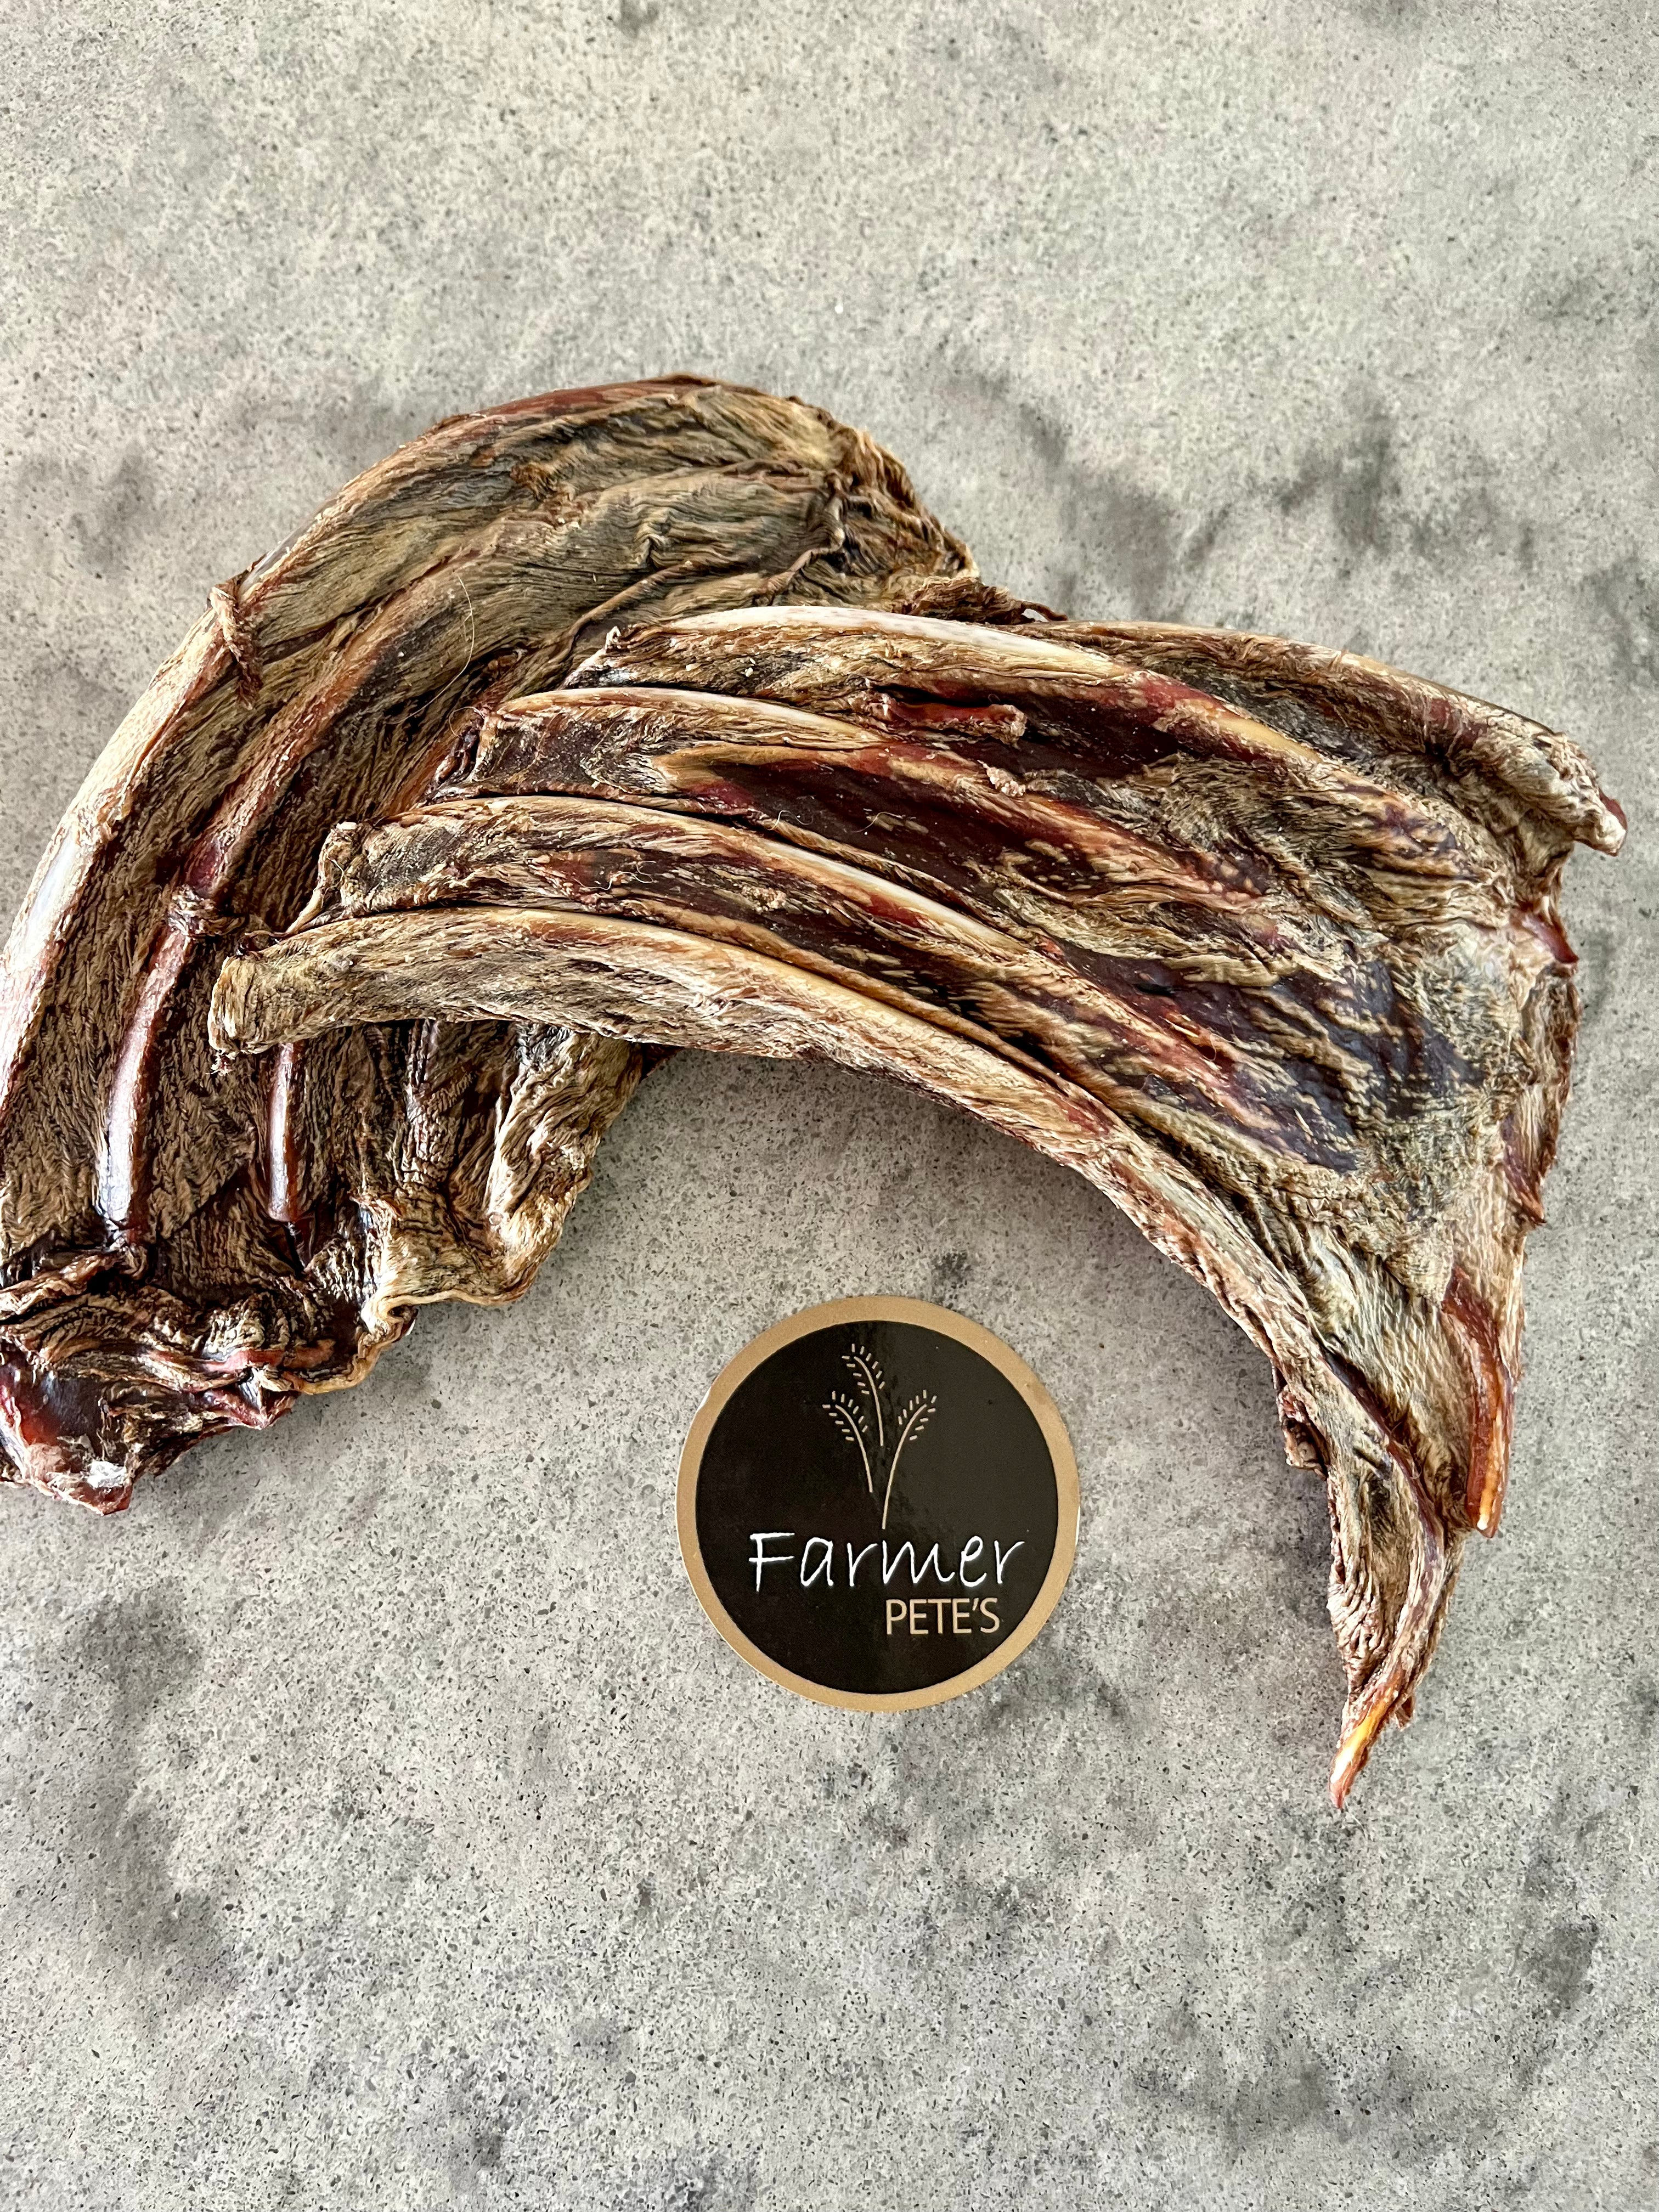 dried kangaroo rib for dog chews by Farmer Pete's